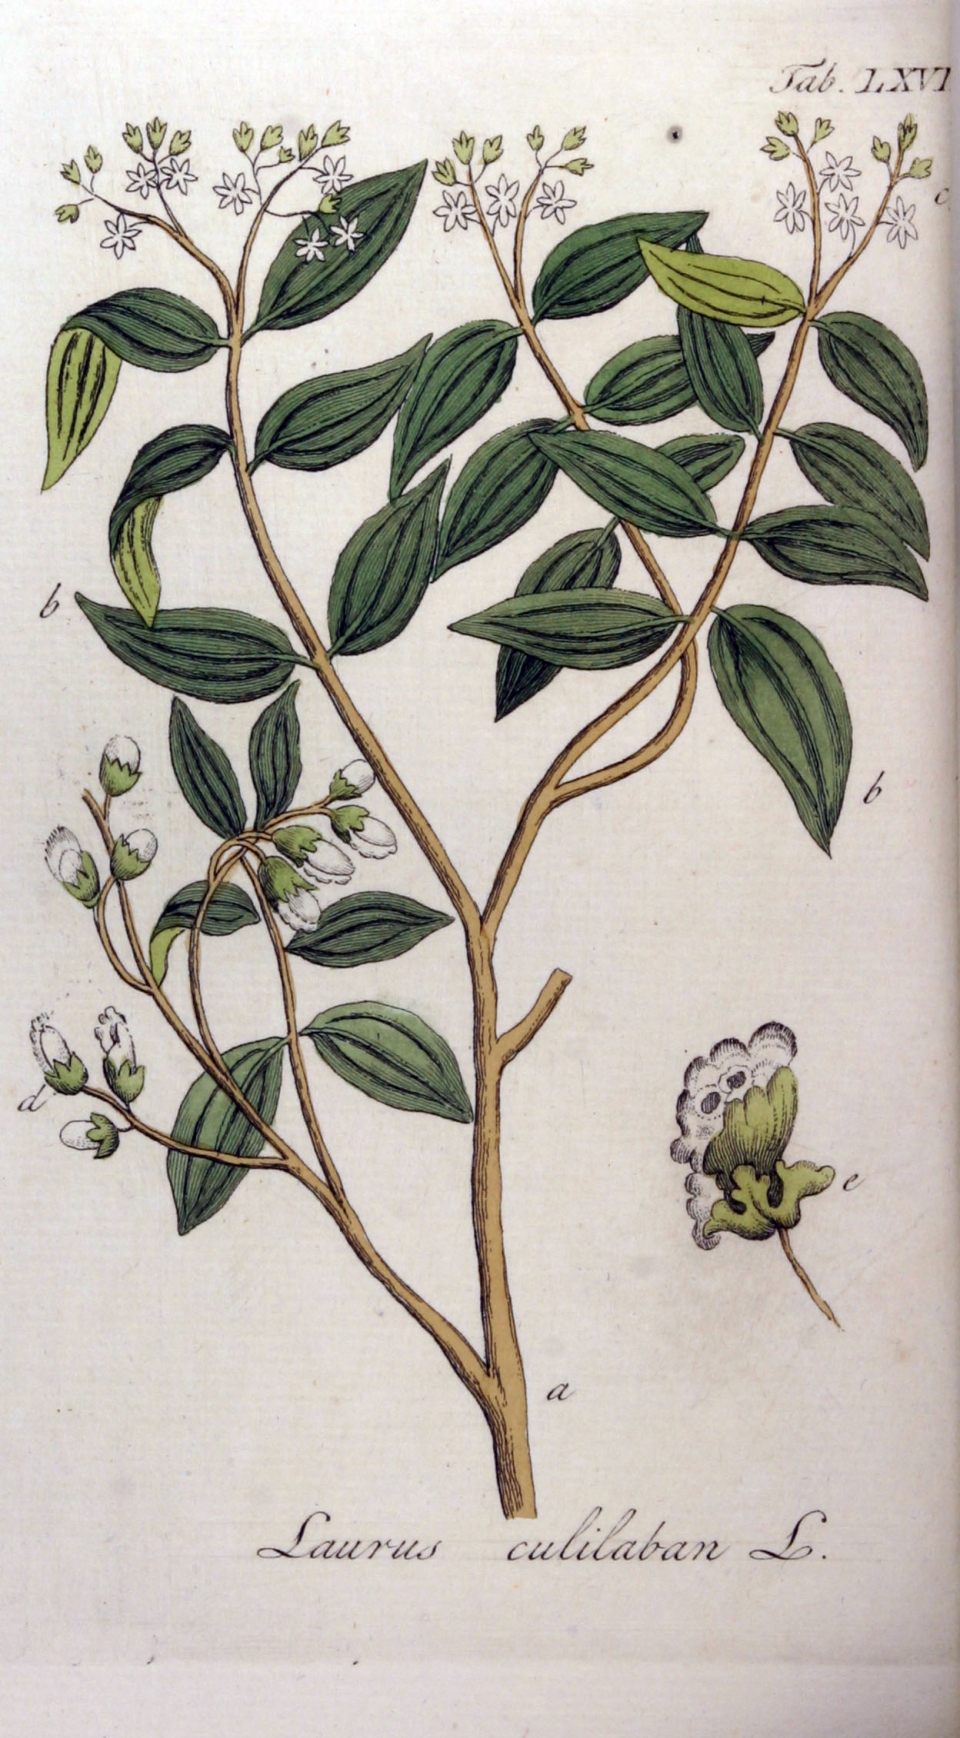 Cinnamomum culitlawan